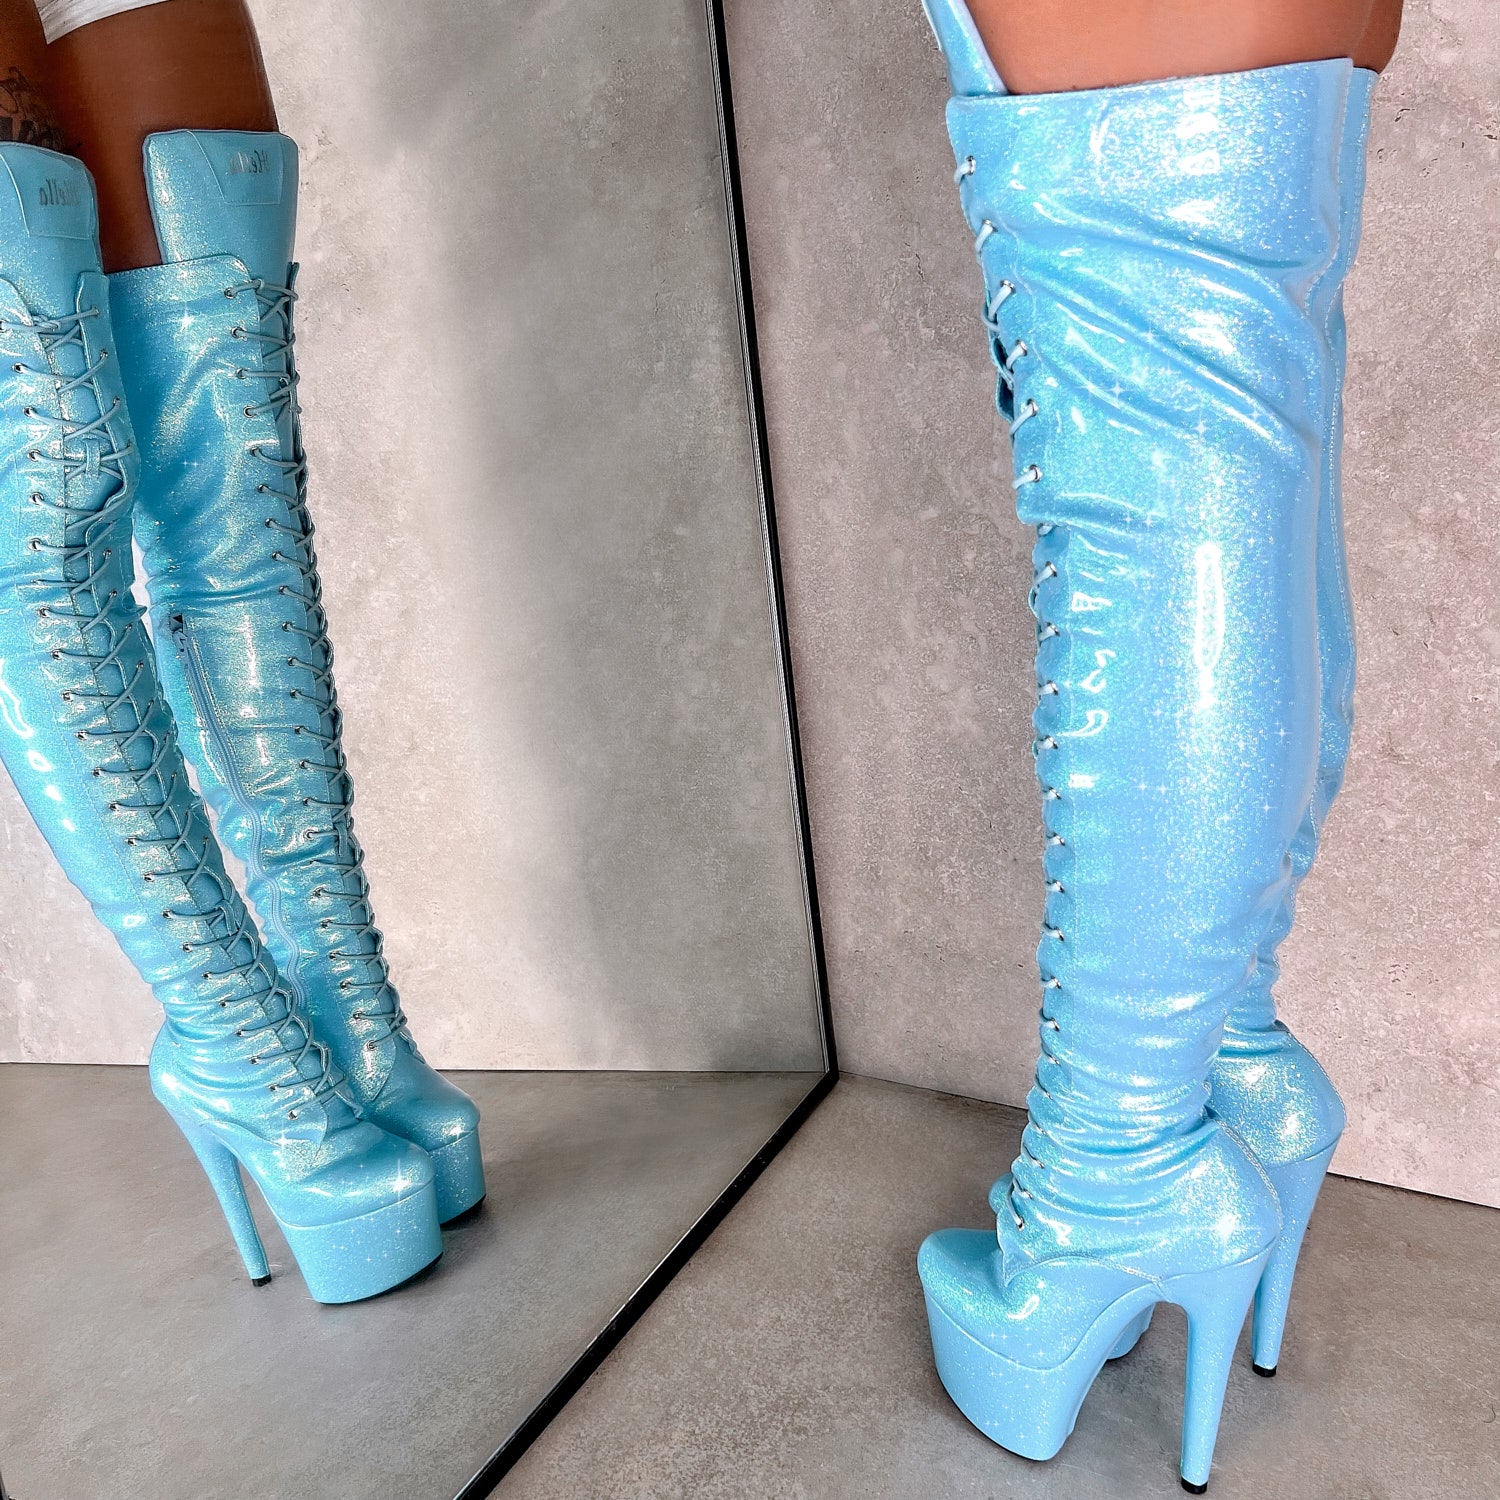 The Glitterati Boot - Baby Blues *2.0* - 8 INCH, stripper shoe, stripper heel, pole heel, not a pleaser, platform, dancer, pole dance, floor work